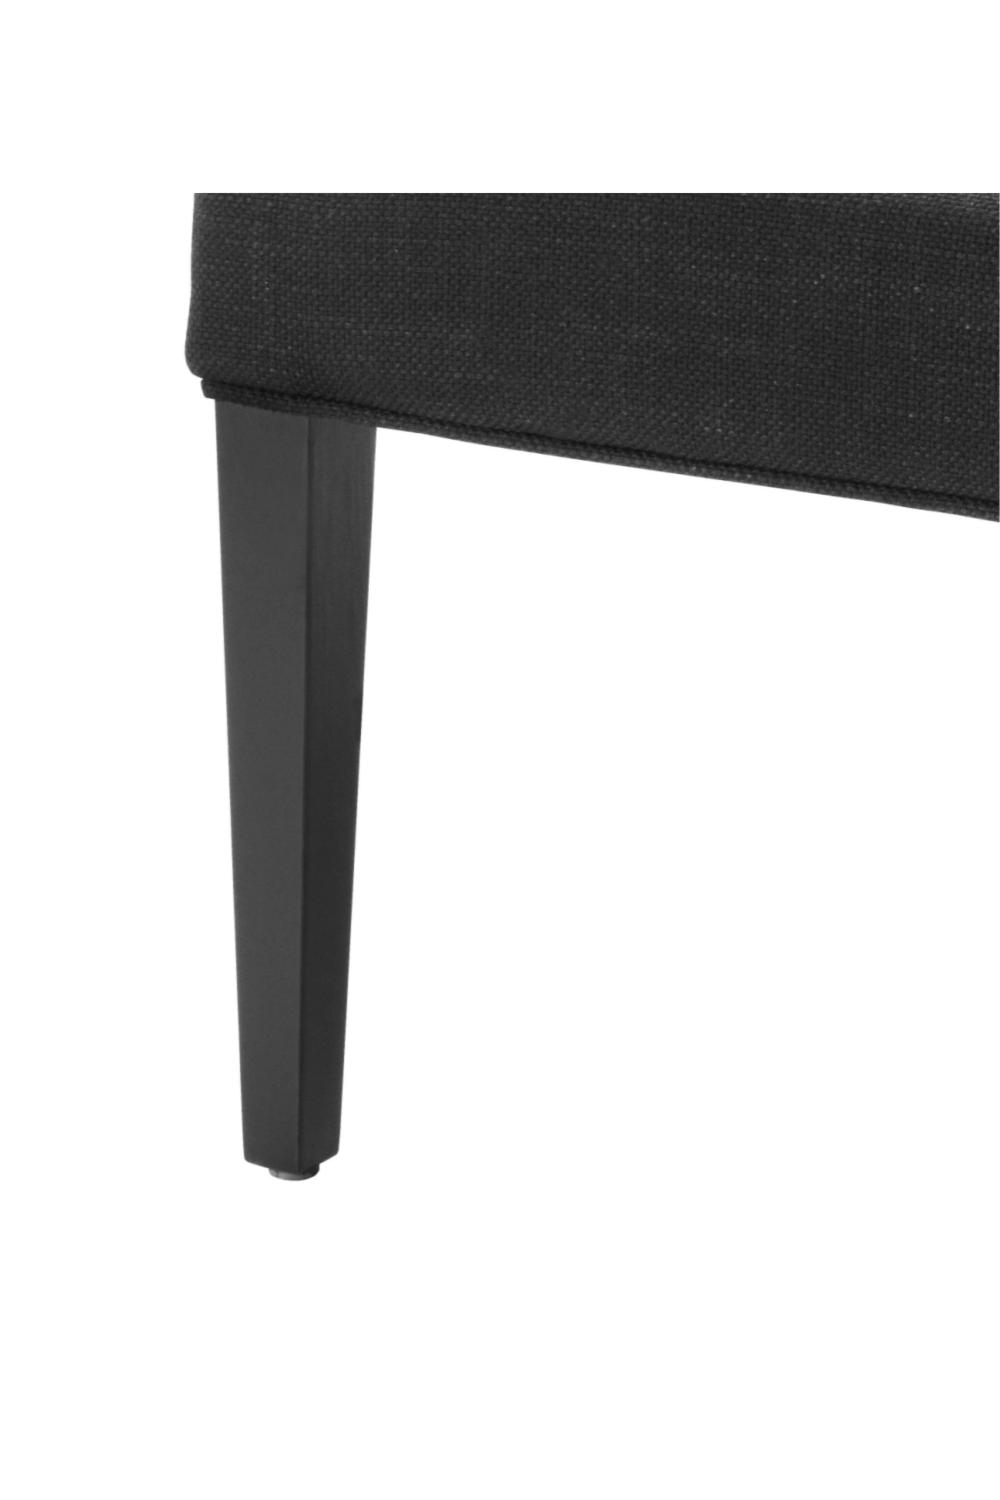 Black Dining Chair | Eichholtz Boca Raton | #1 Eichholtz Retailer